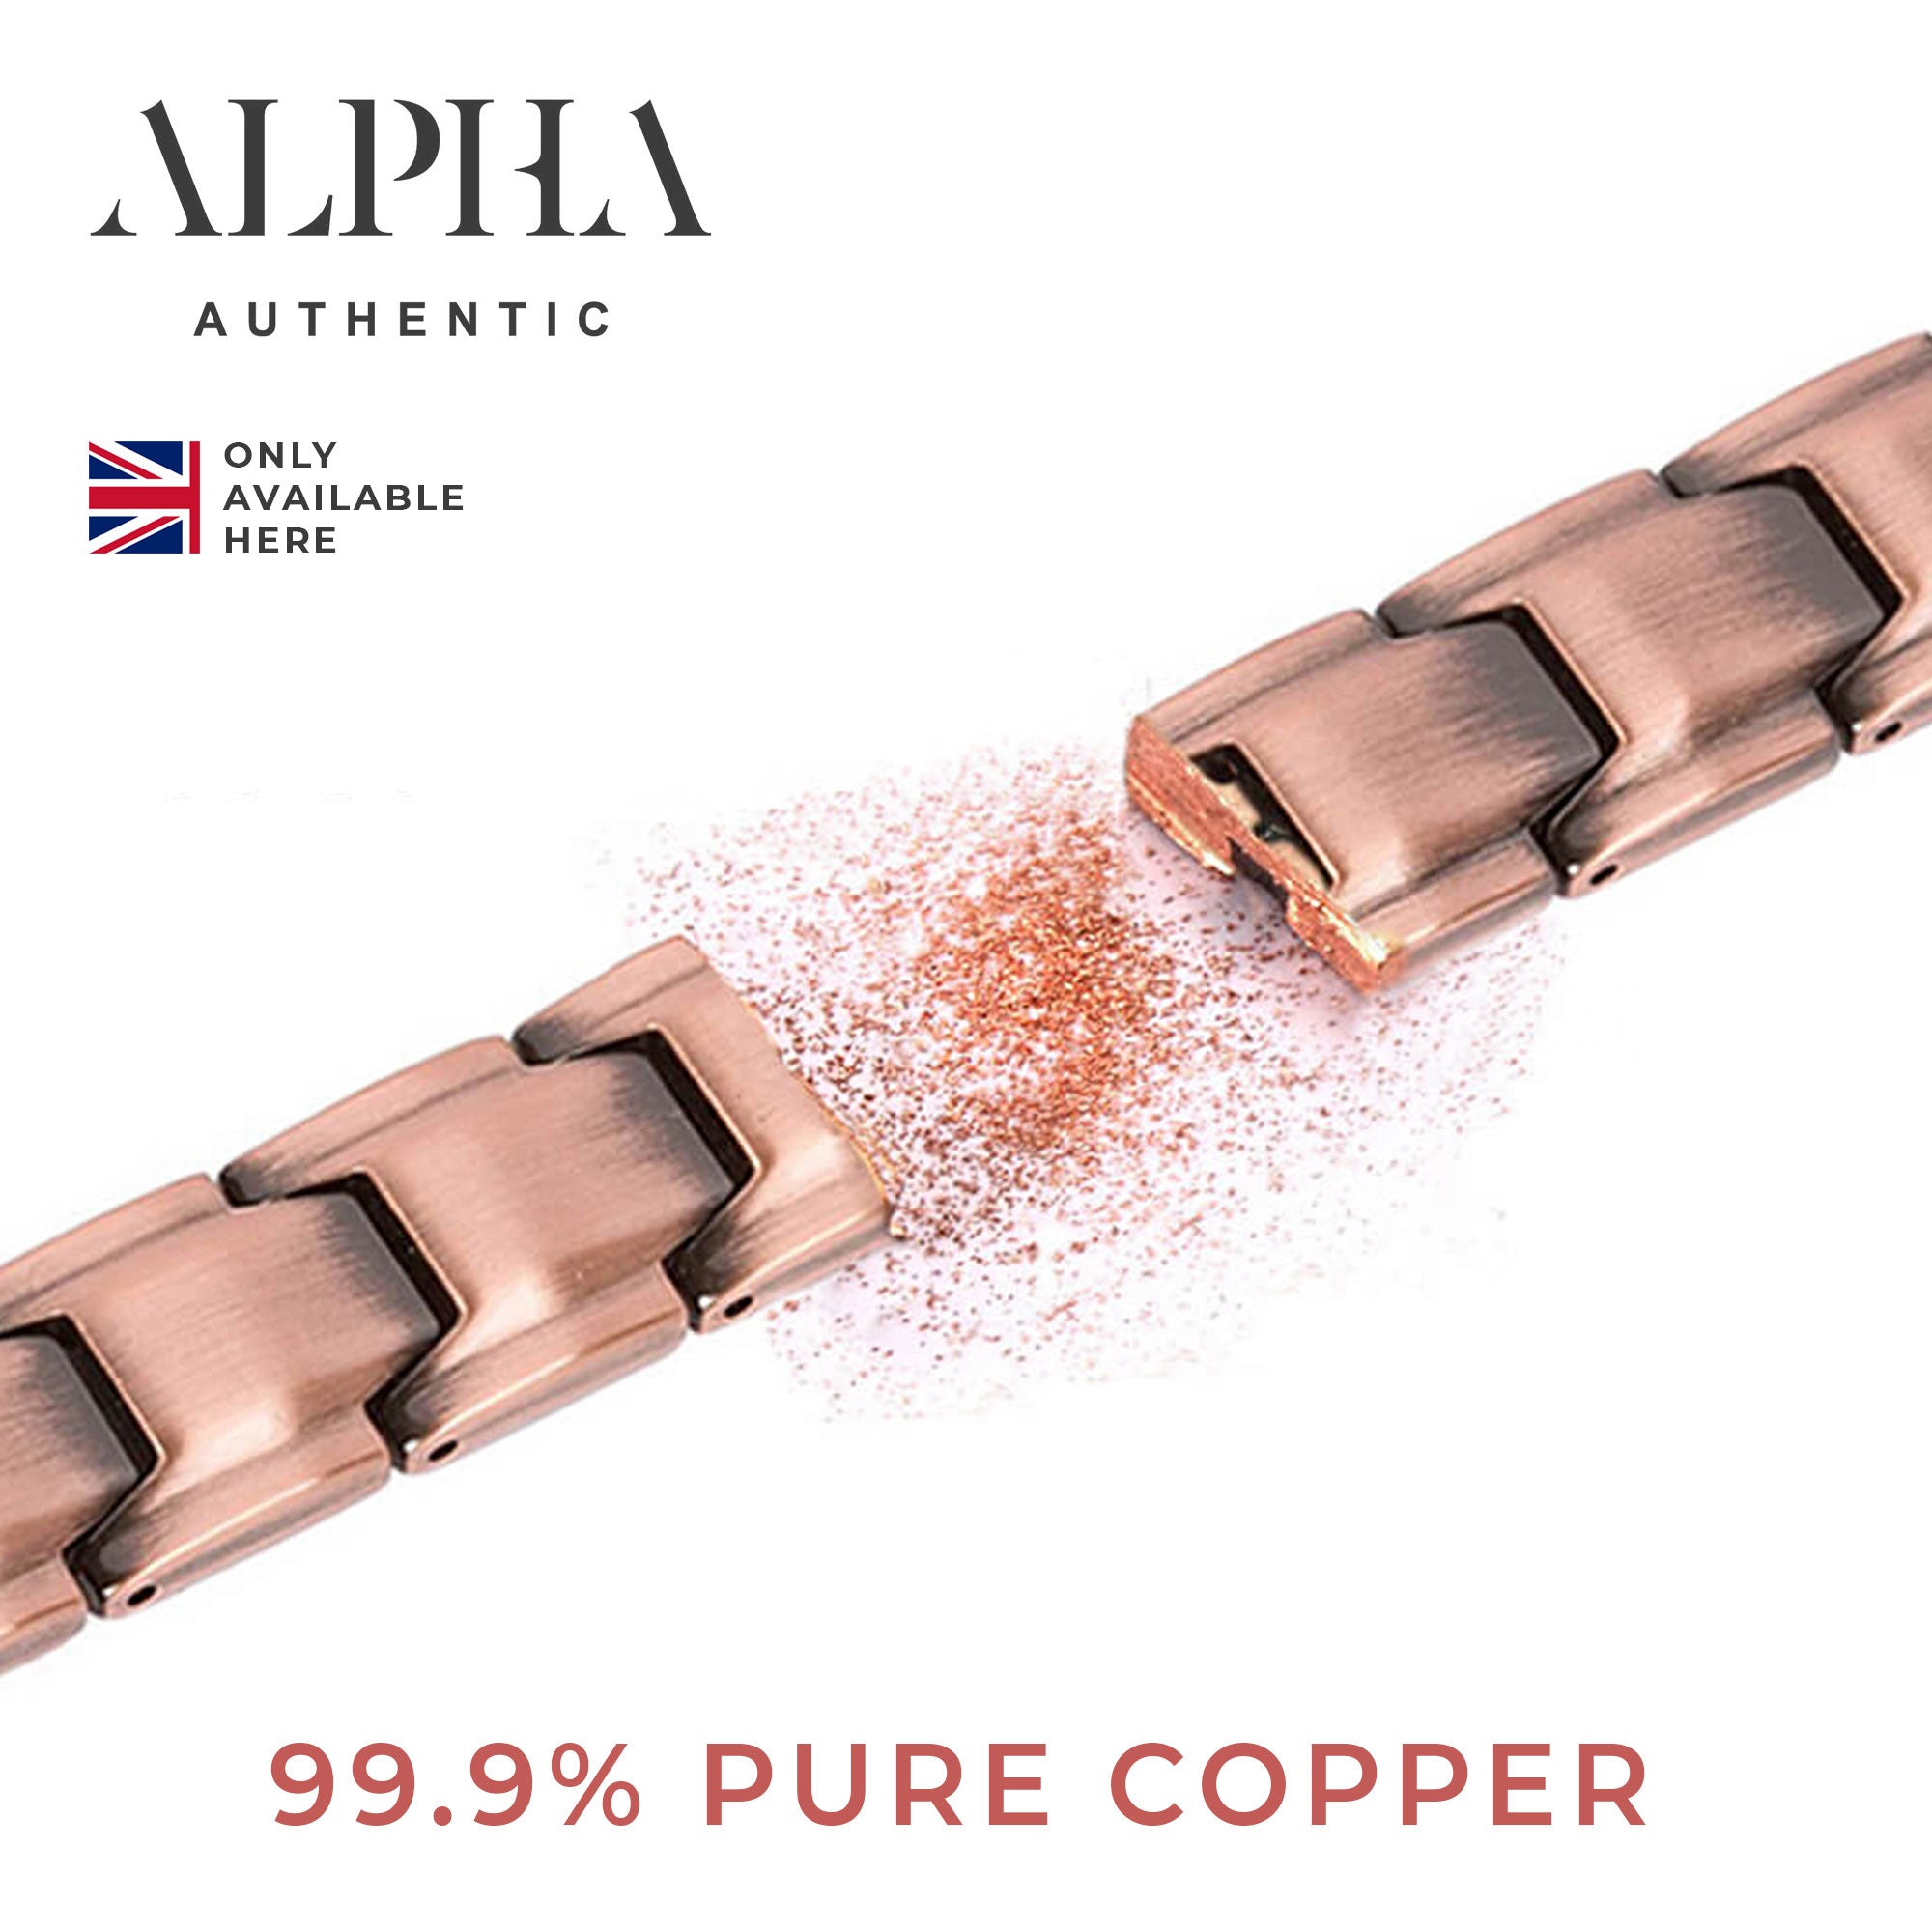 Solid copper bracelet cross section